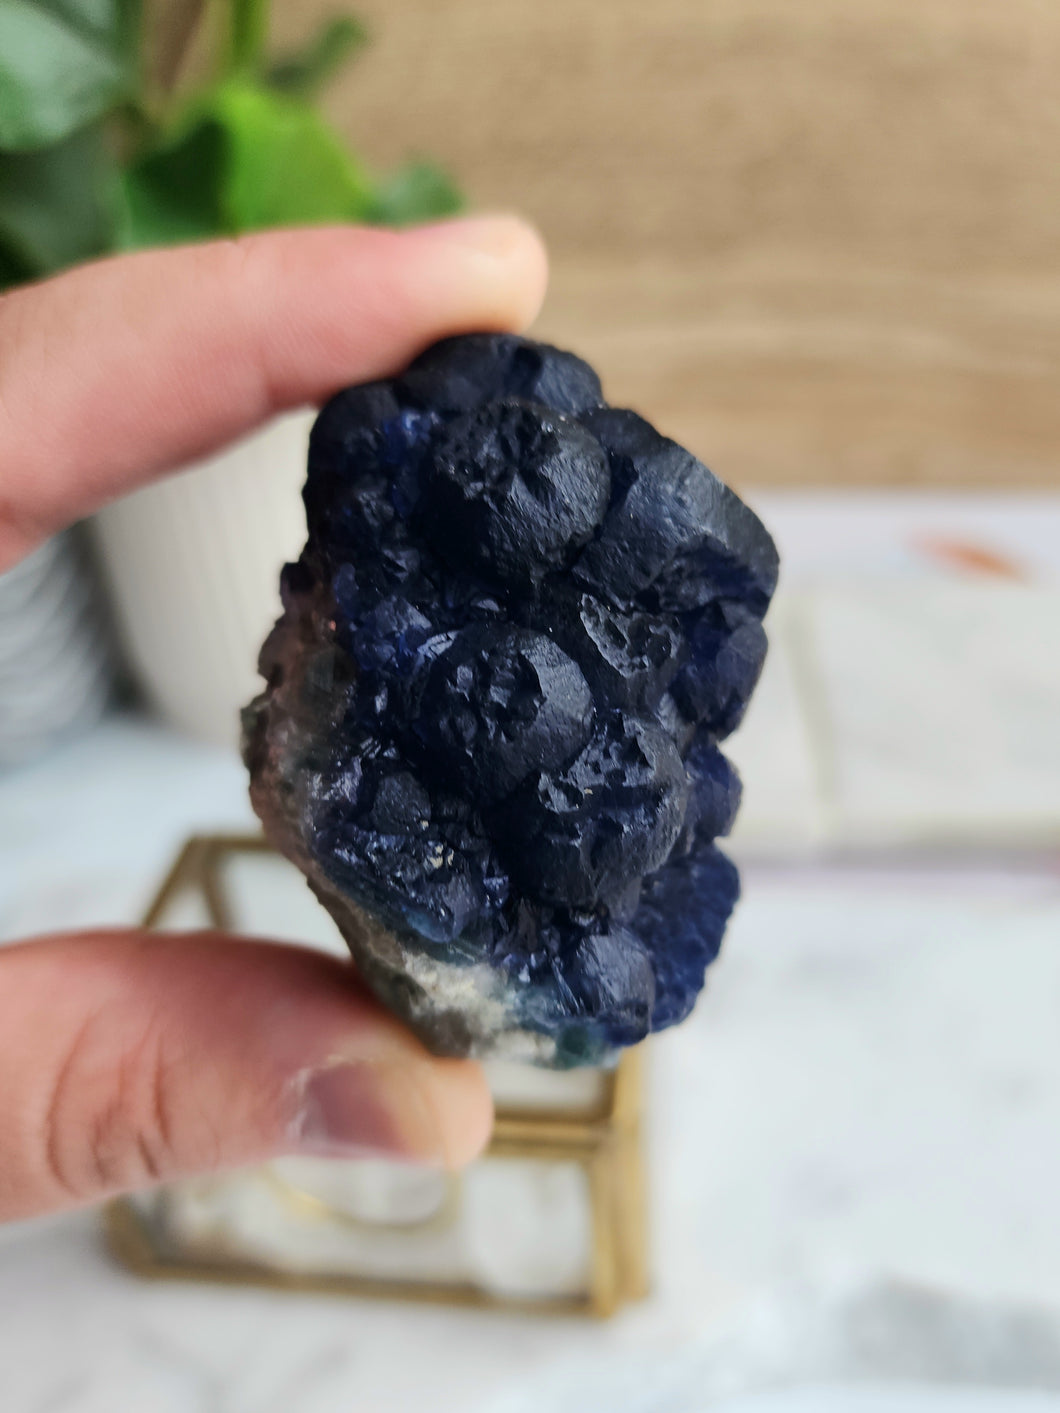 'Blueberry' Fluorite on Quartz #3